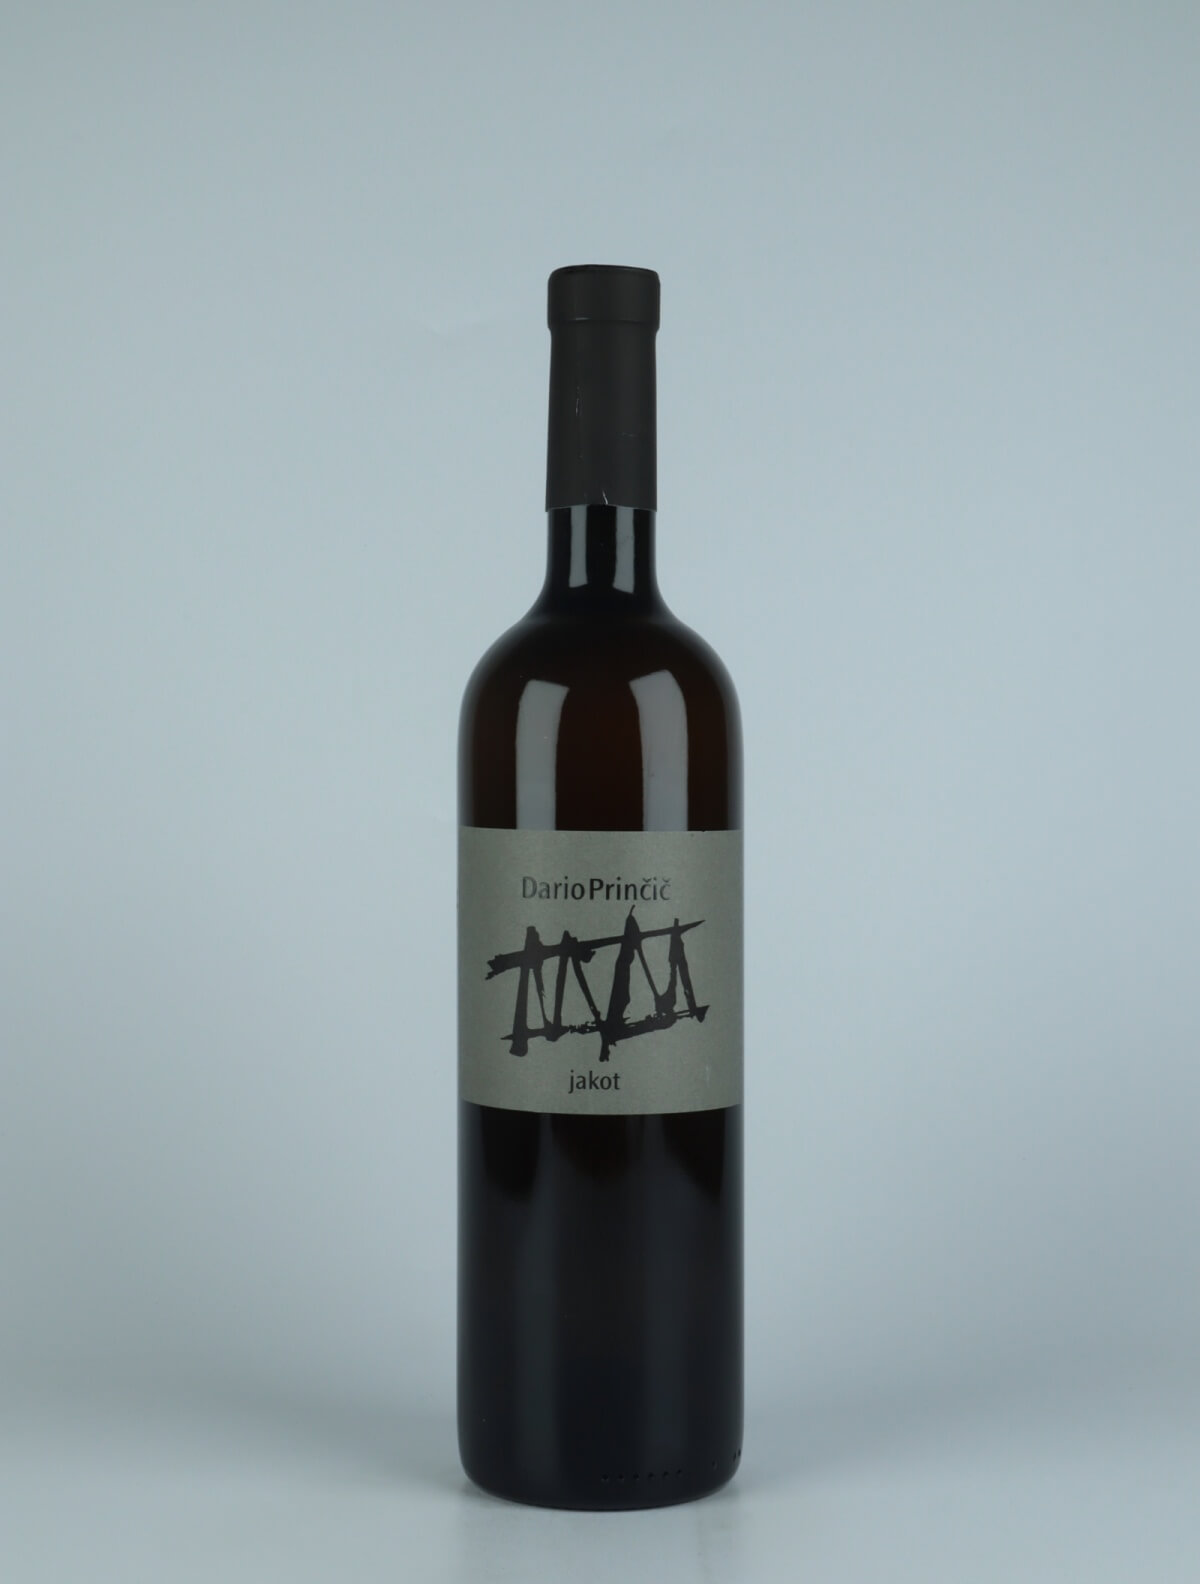 A bottle 2019 Jakot Orange wine from Dario Princic, Friuli in Italy